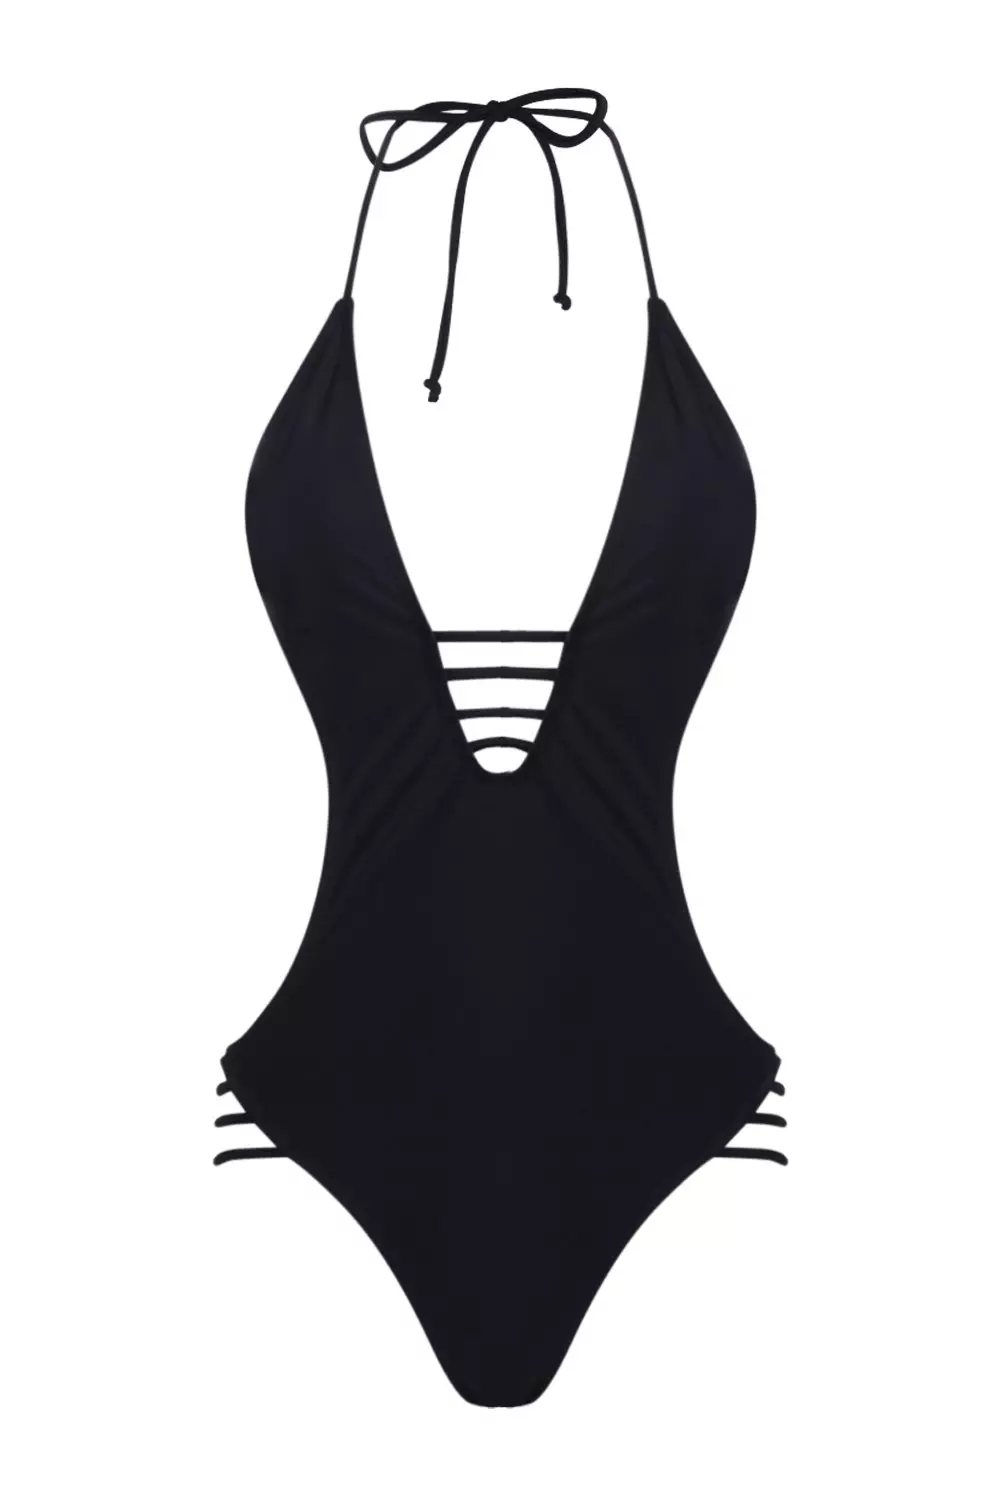 Herrnalise Womens Backless Swimsuits Two Piece SwimwearHigh-Waisted  Backless Beachwear Solid Bikinis Tops Khaki 